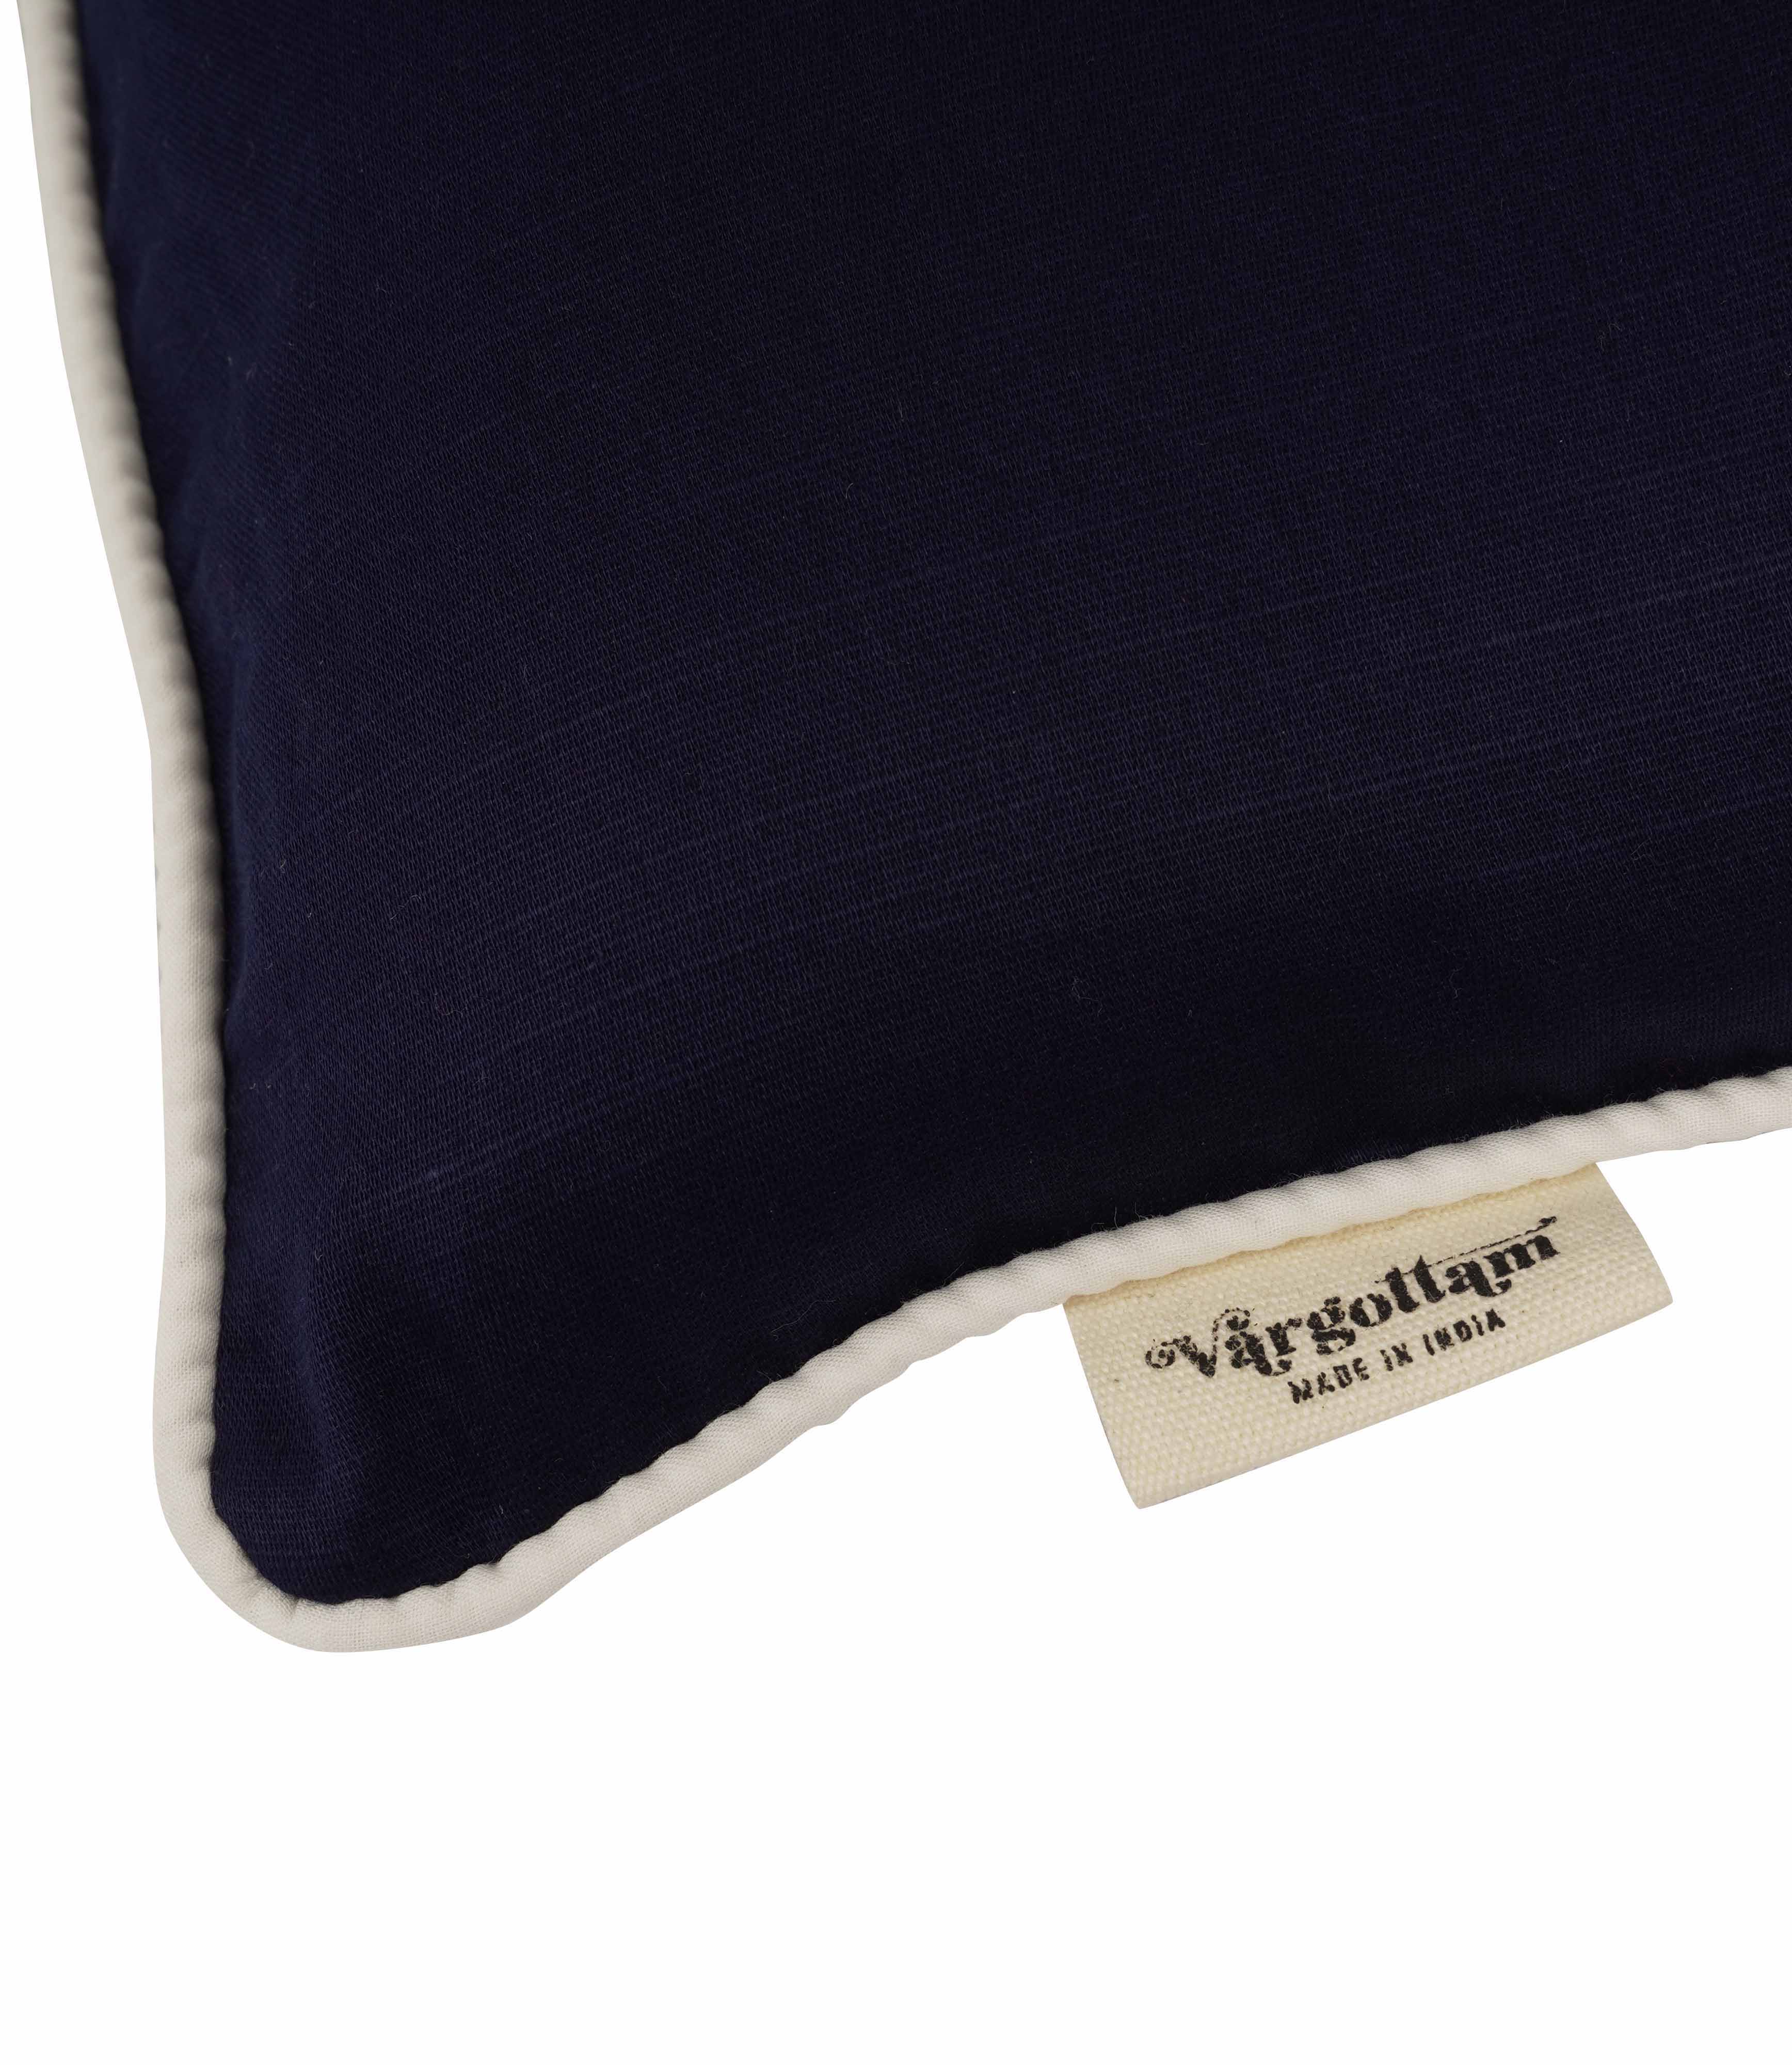 Vargottam Embroidered Mr & Mrs Lumbar Decorative Throw Pillow Cover-RCG 